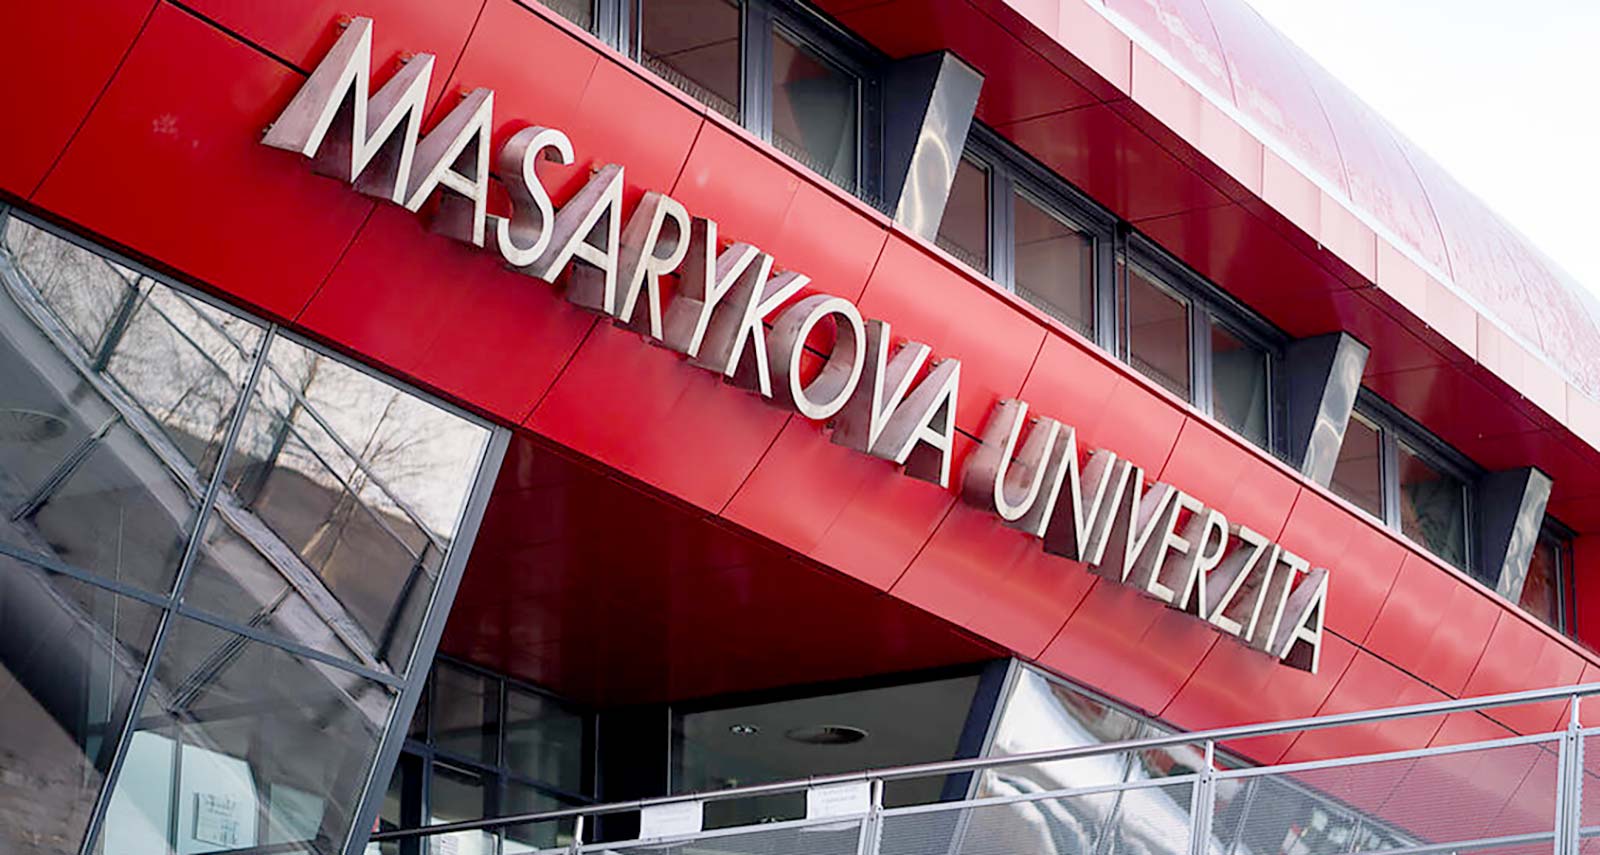 Grant Agency of Masaryk University (GAMU)